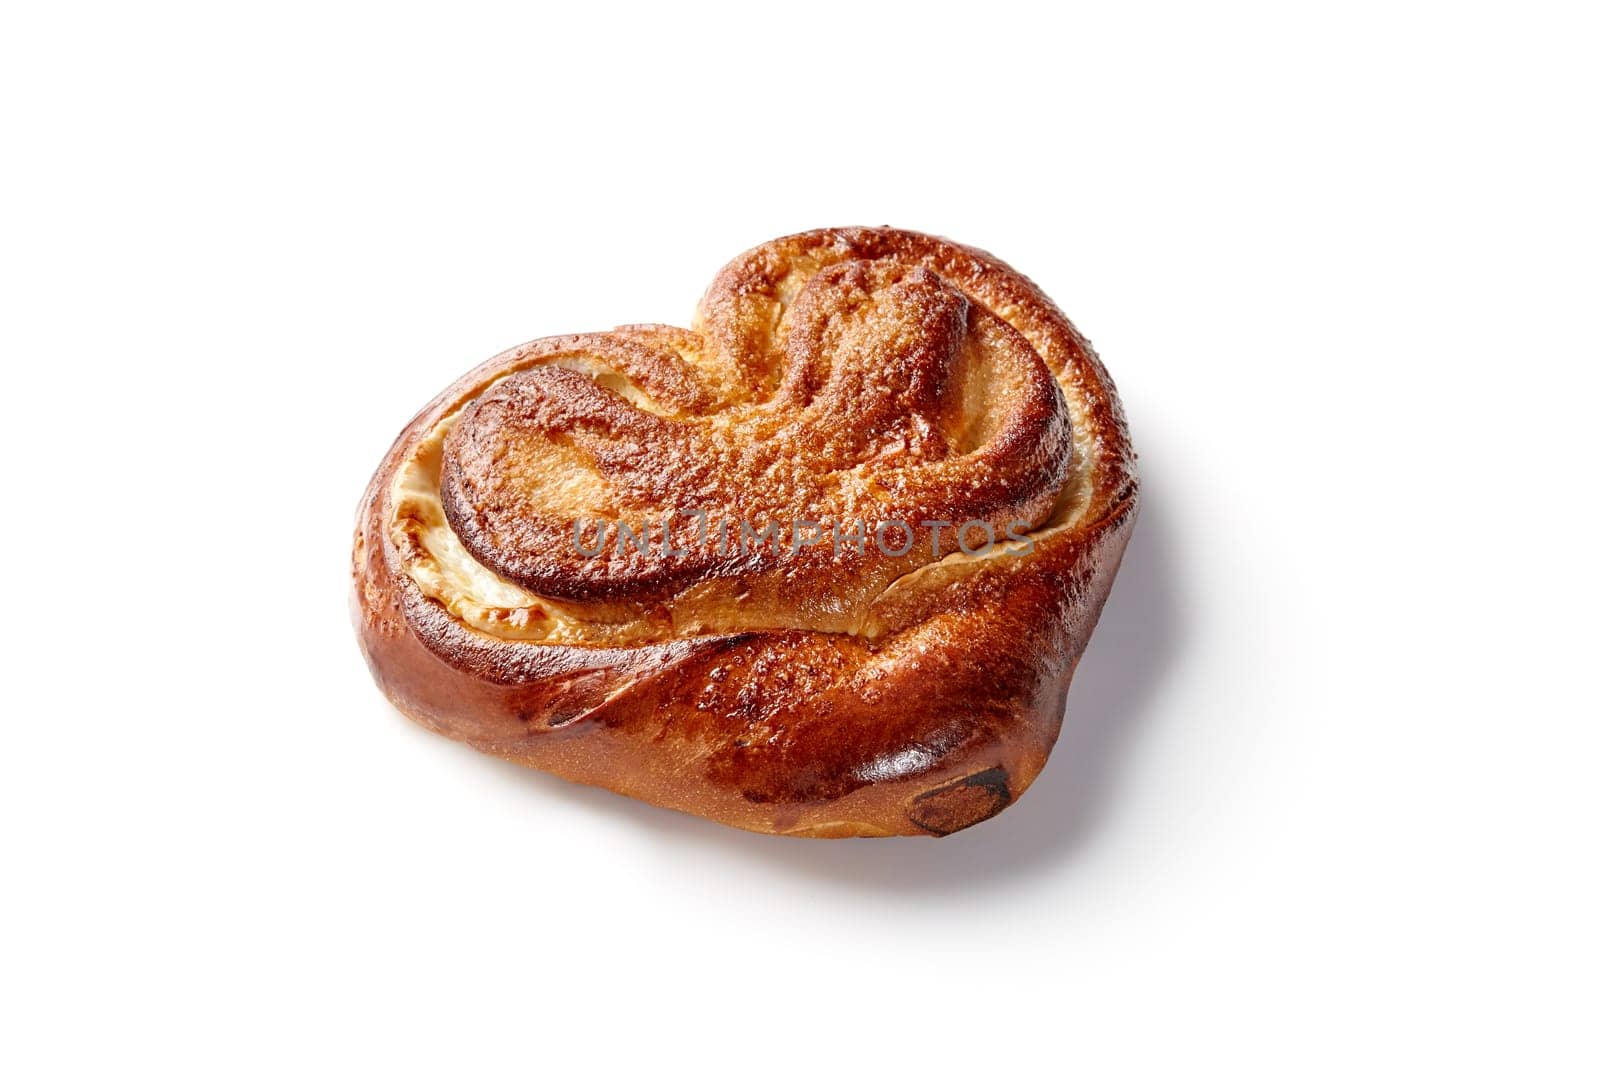 Sugar-dusted sweet bun filled with custard on white background by nazarovsergey